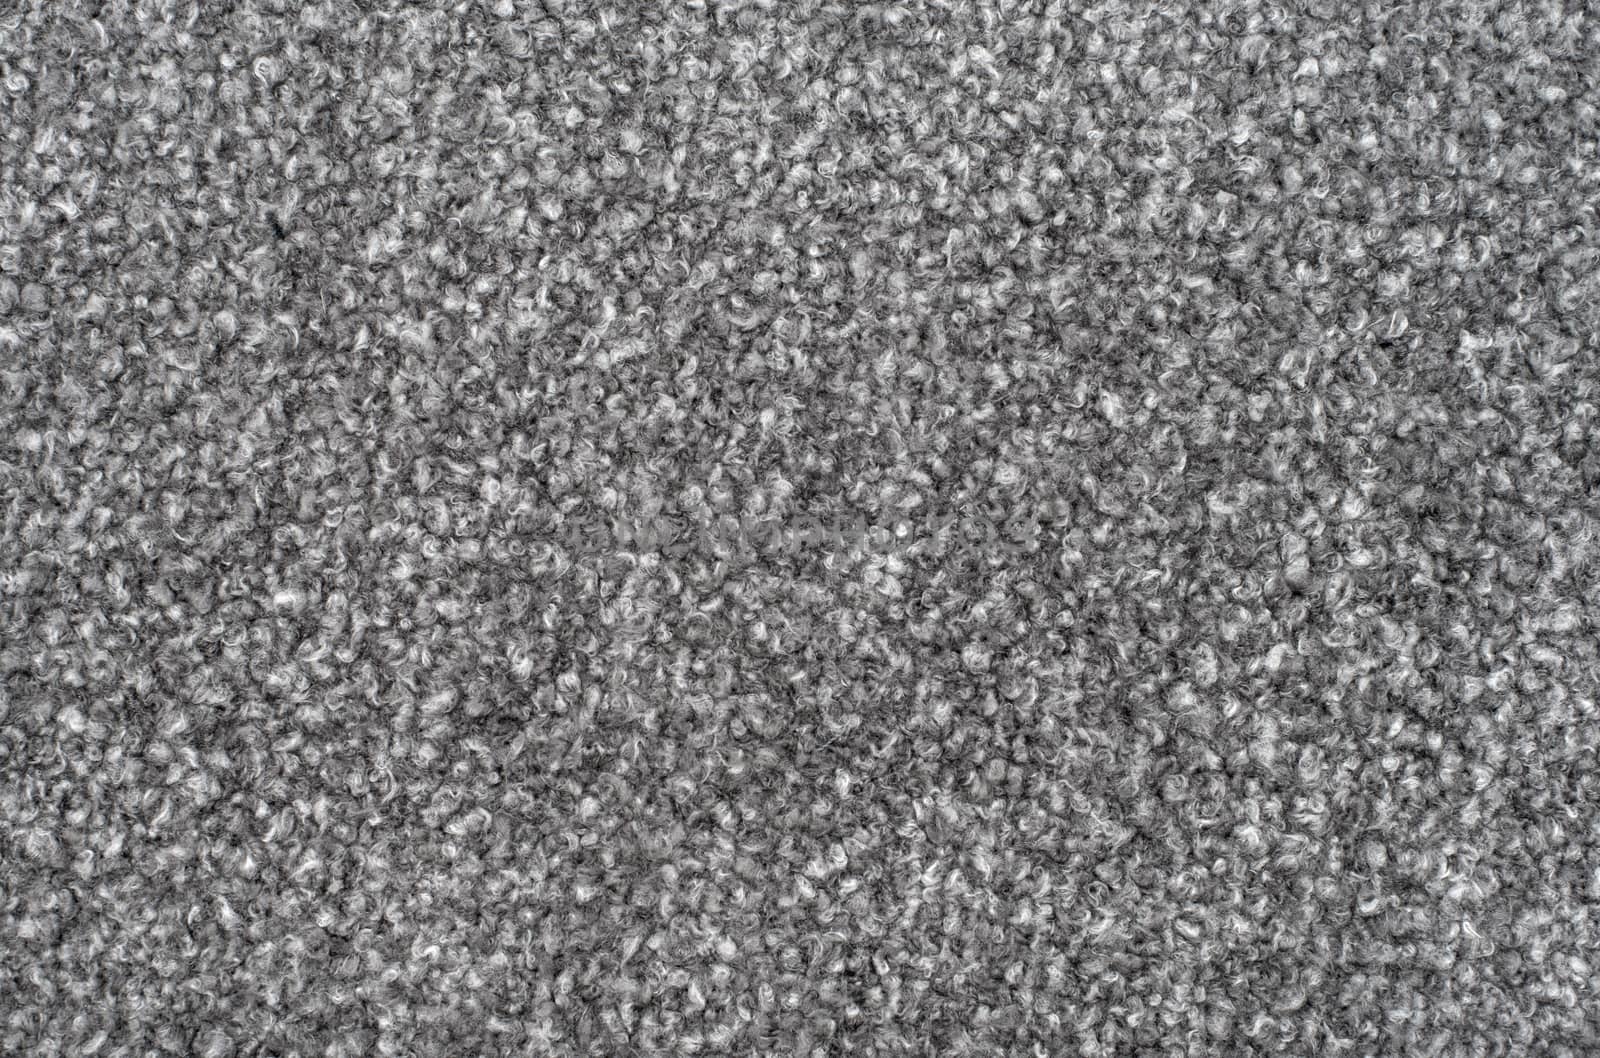 Gray carpet texture by DNKSTUDIO